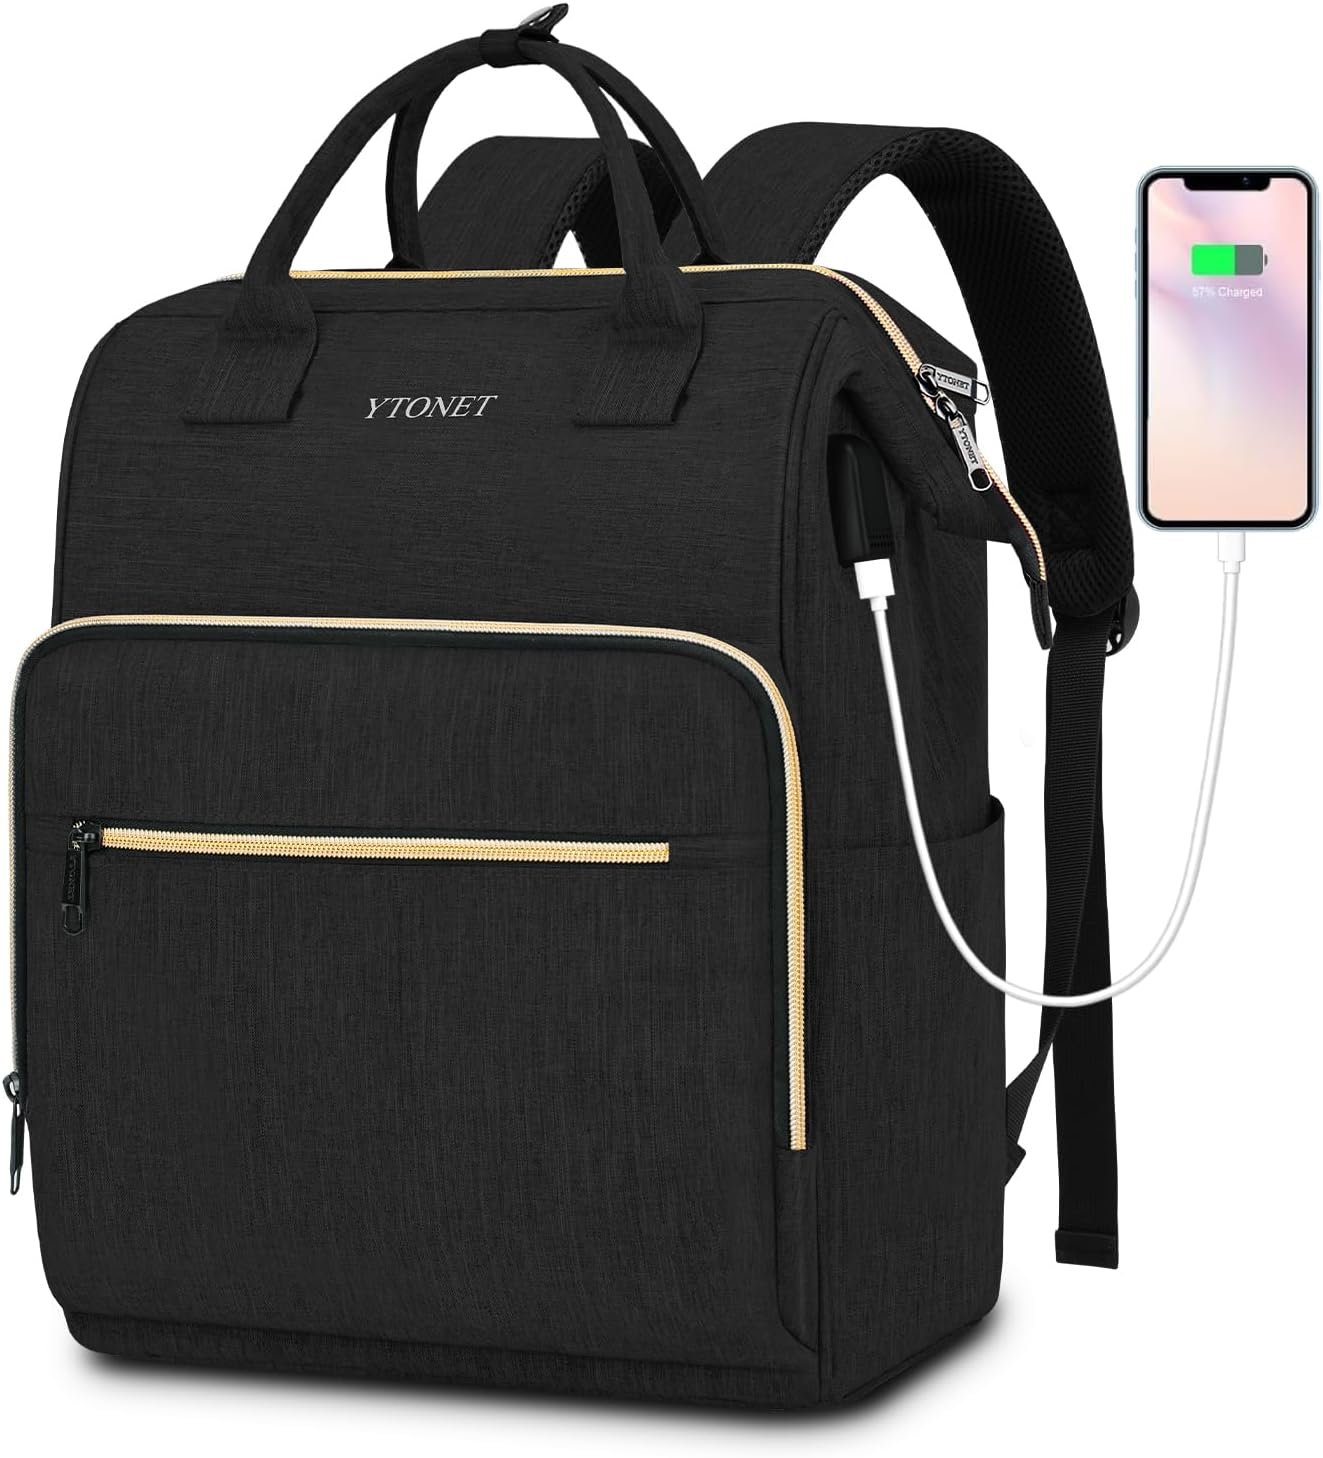 Ytonet Laptop Backpack Women Review